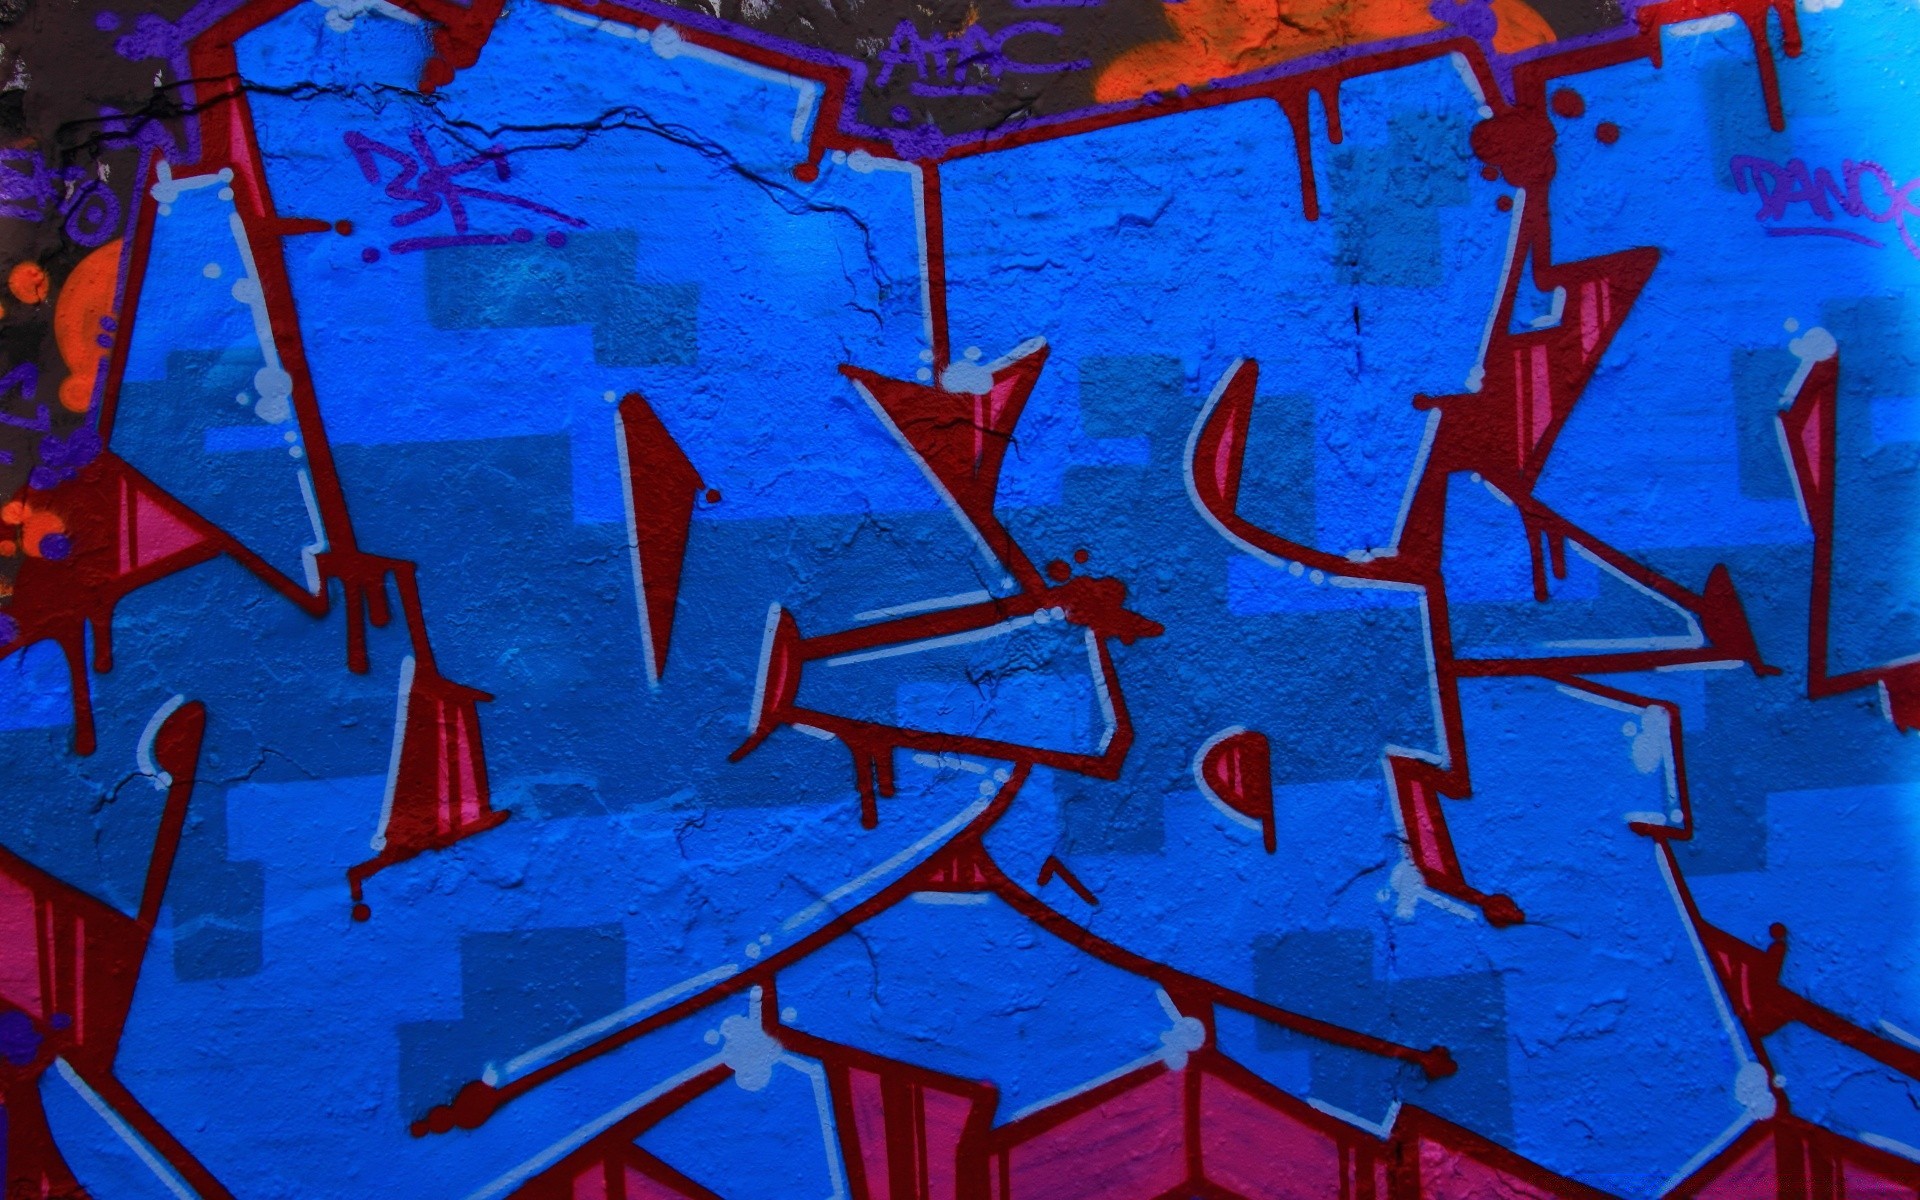 graffiti art vandalism artistic abstract wall illustration desktop creativity design spray messy color texture urban pattern painting shape